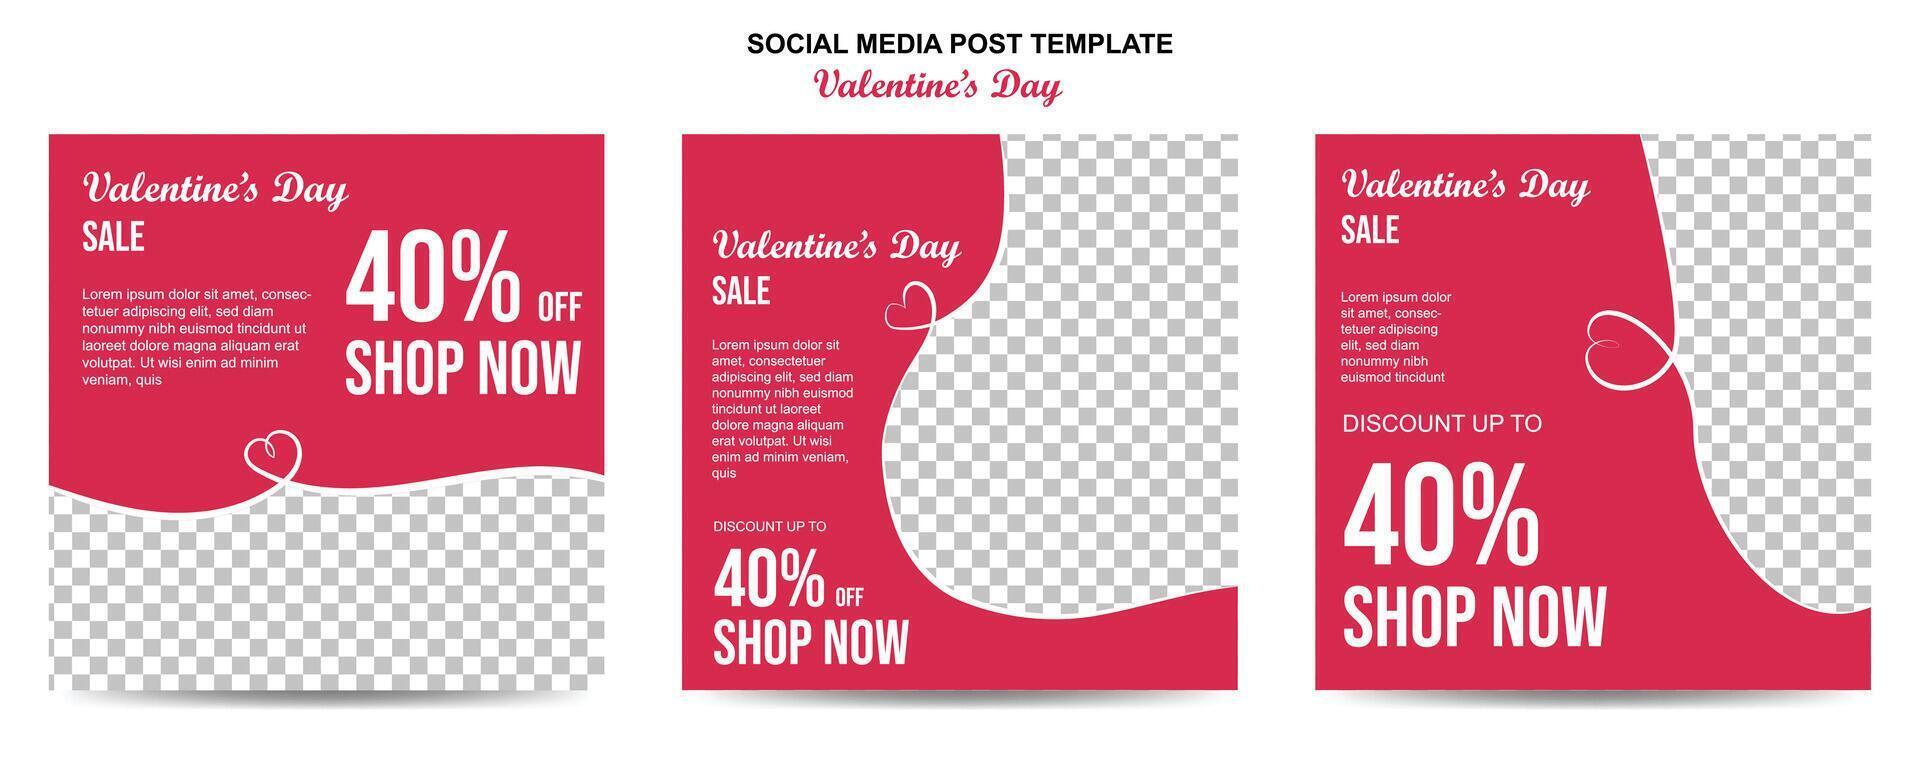 valentine's day social media template vector